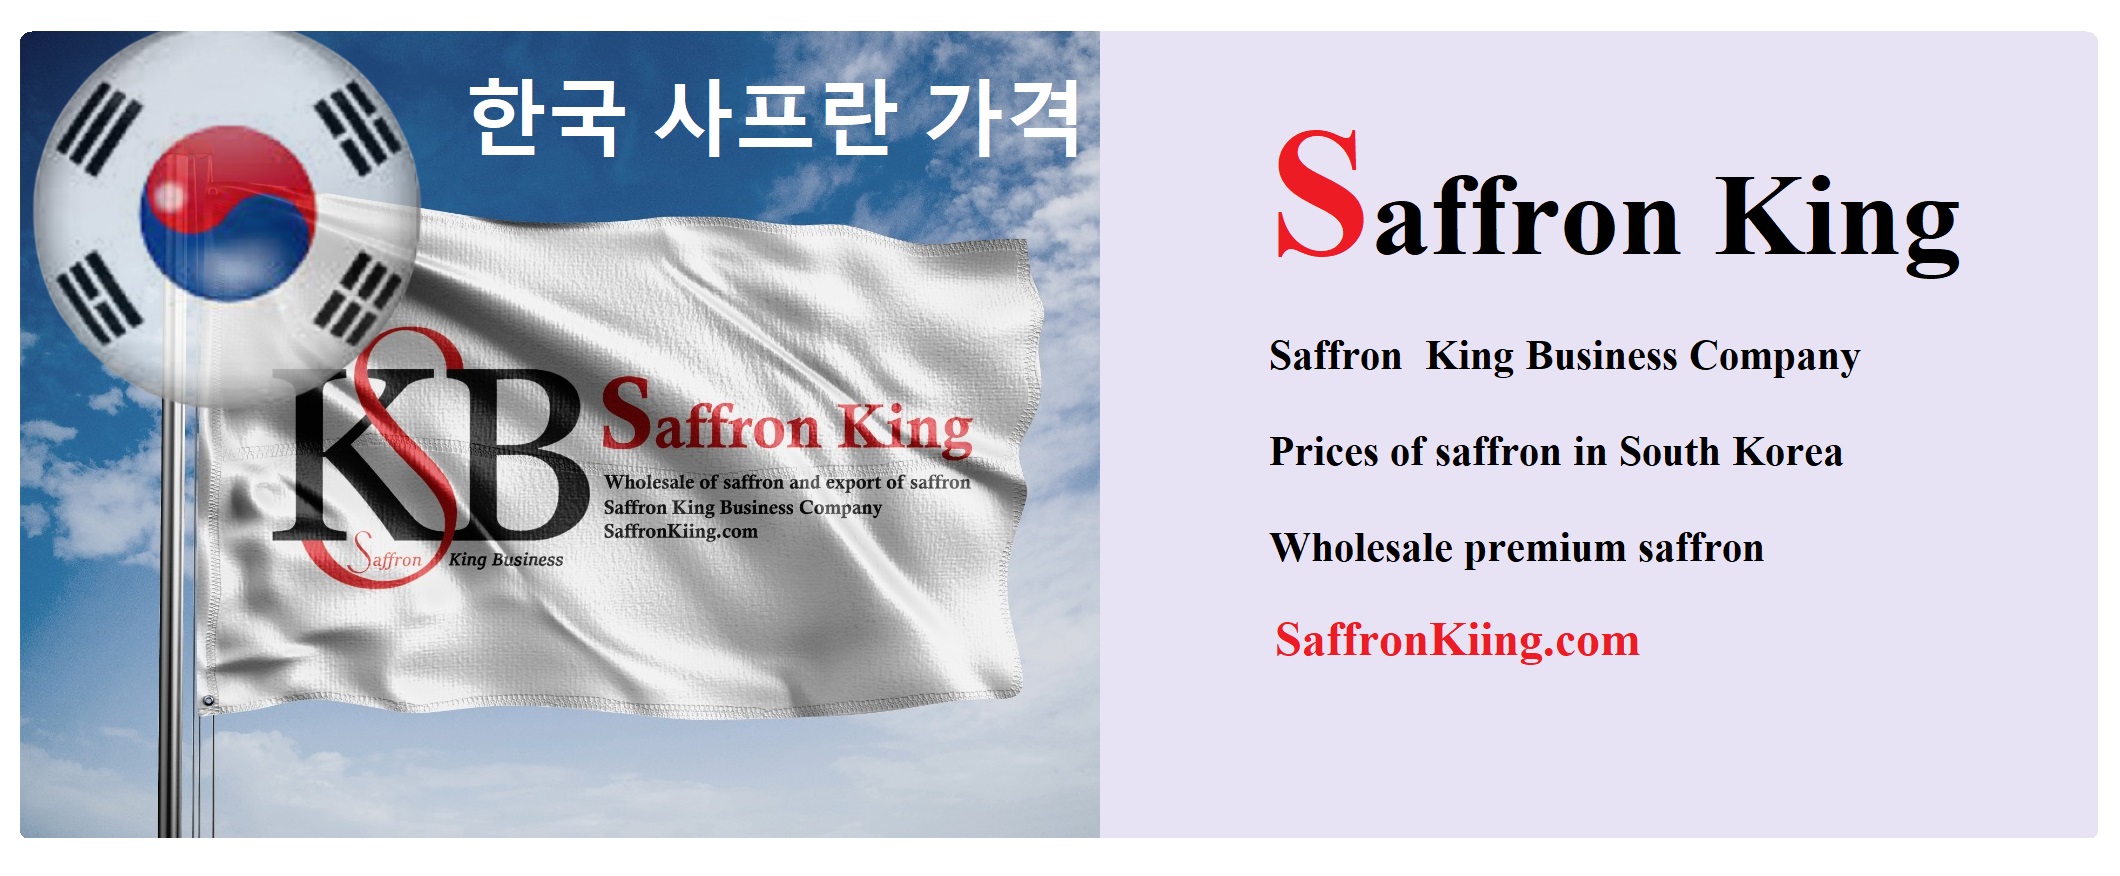 Prices of saffron in South Korea